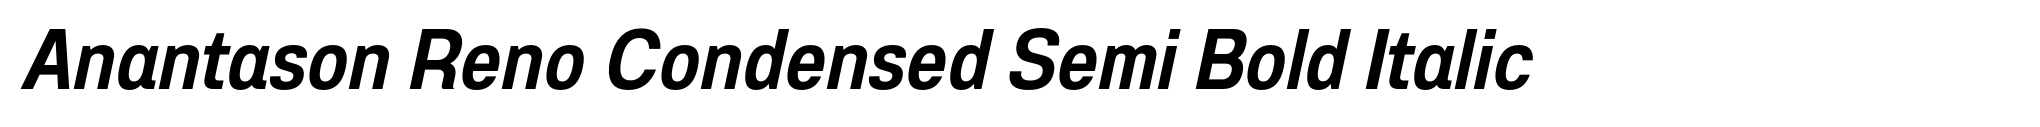 Anantason Reno Condensed Semi Bold Italic image